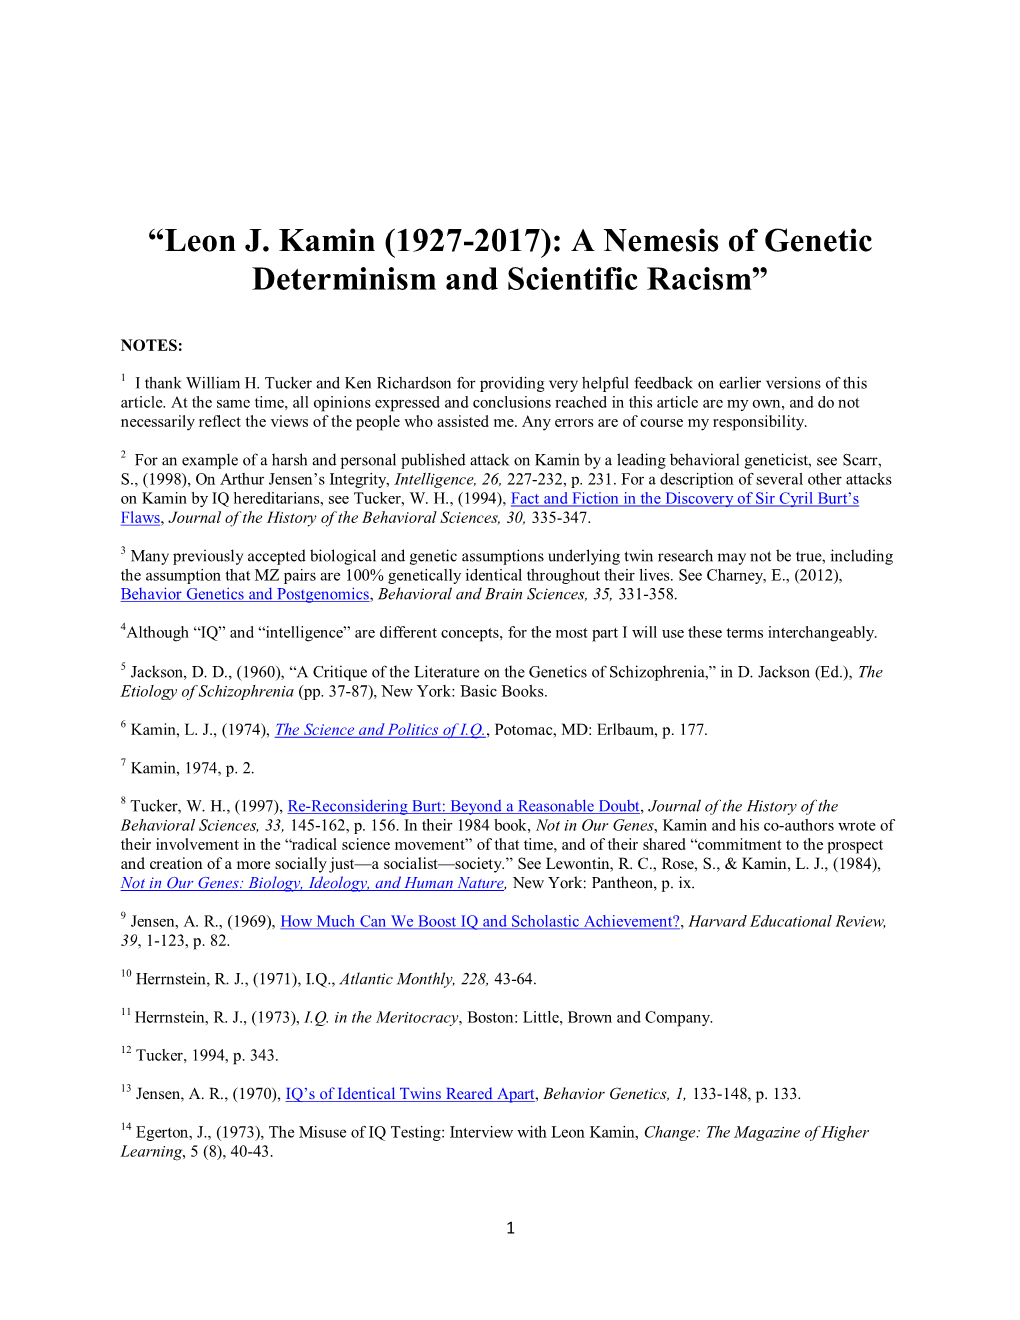 Leon J. Kamin (1927-2017): a Nemesis of Genetic Determinism and Scientific Racism”